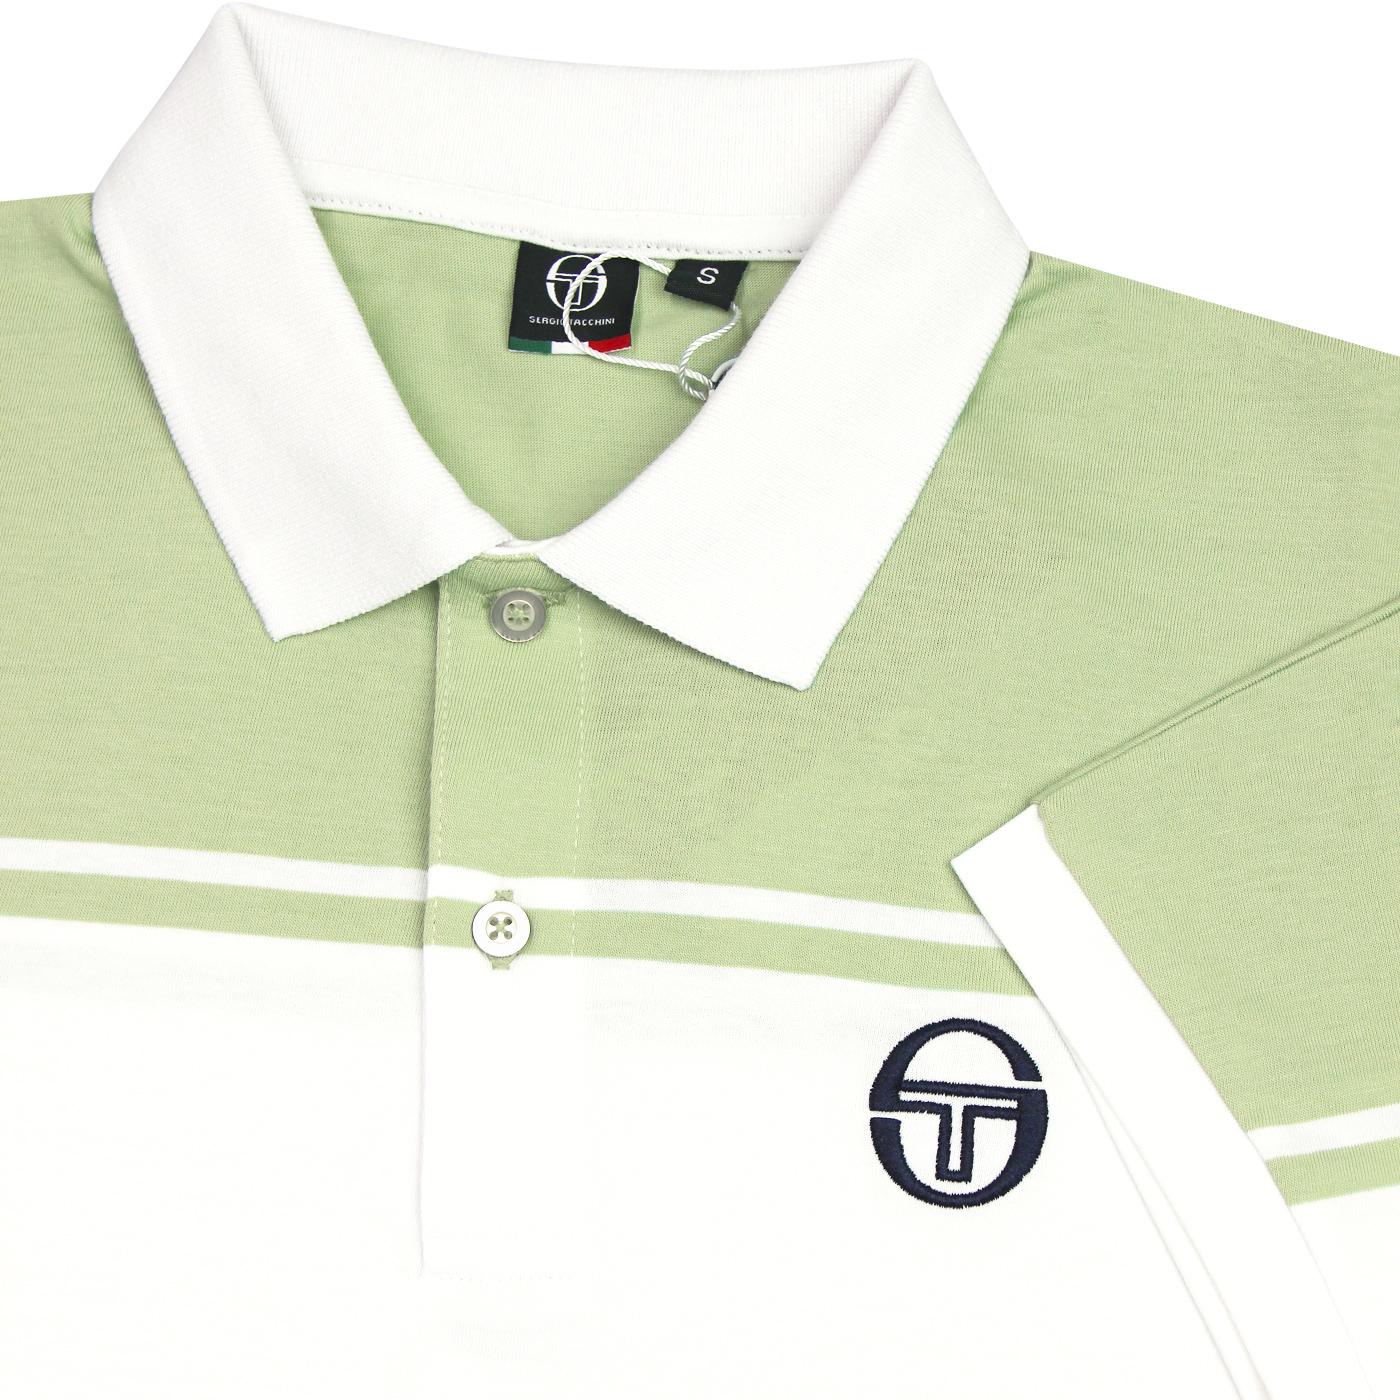 Sergio Tacchini New Young Line Polo Shirt in White & Green retro 80s tennis